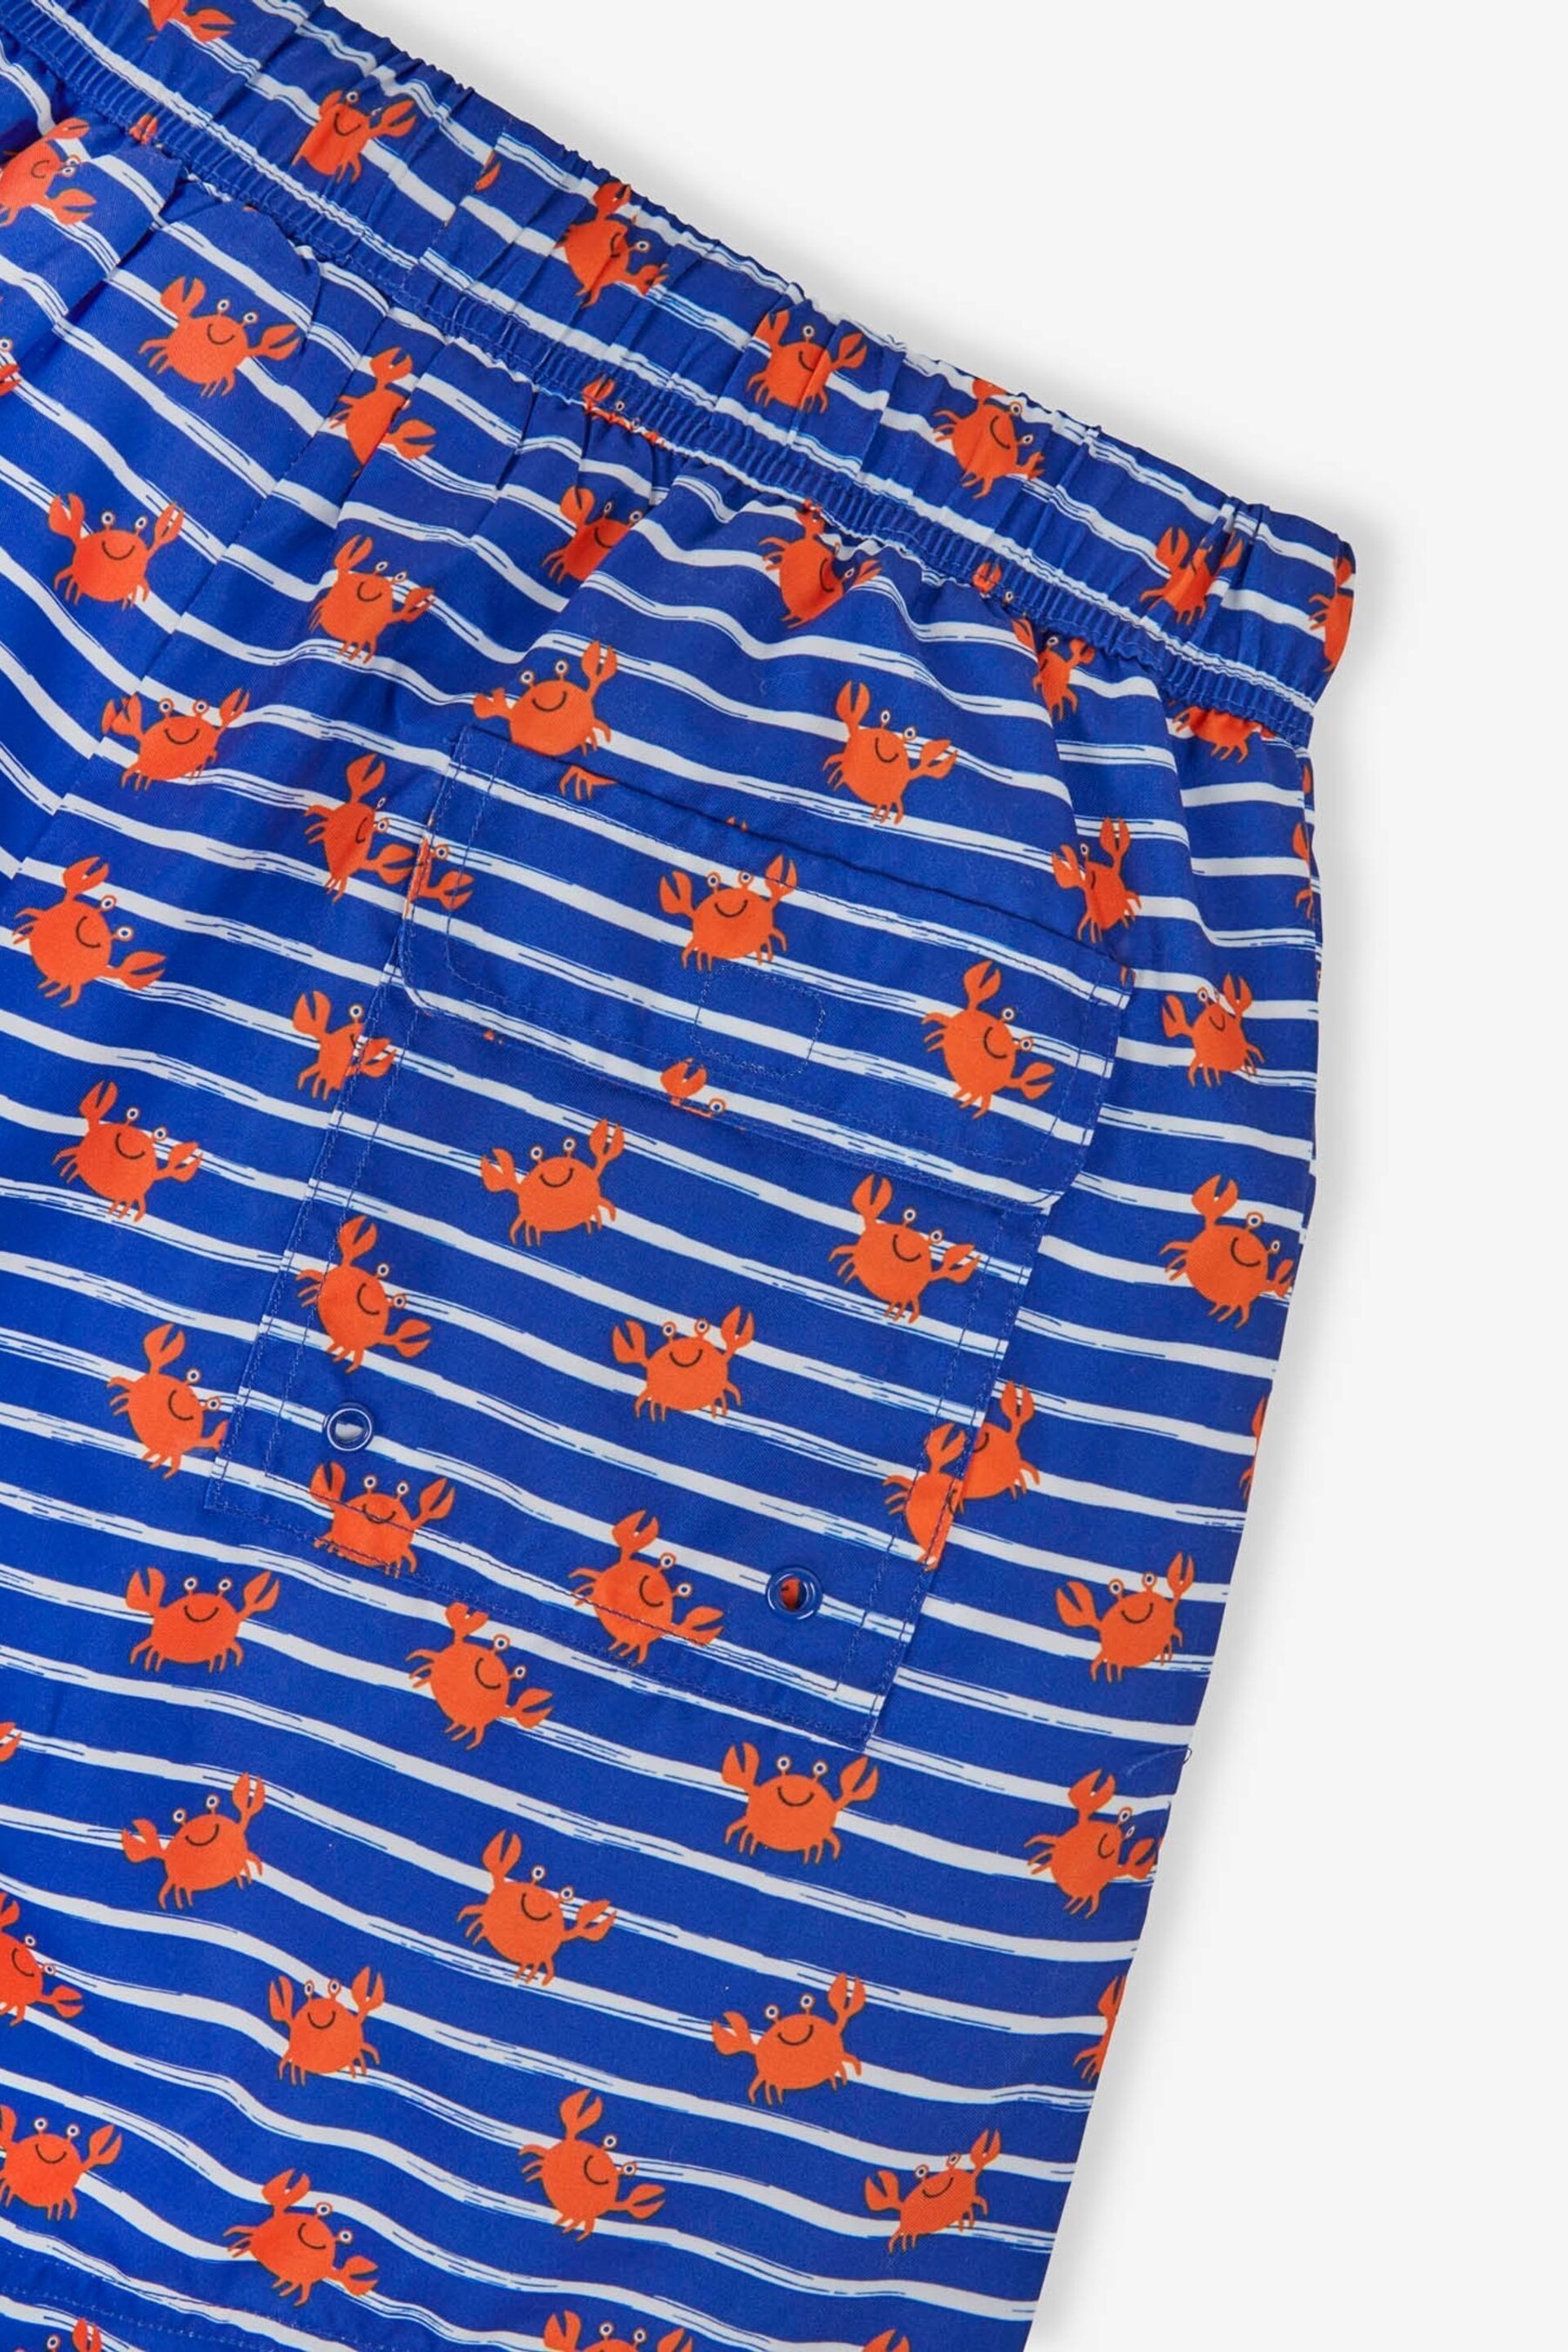 JoJo Maman Bébé Blue Stripe & Orange Crab Print Men's Print Swim Shorts - Image 2 of 4